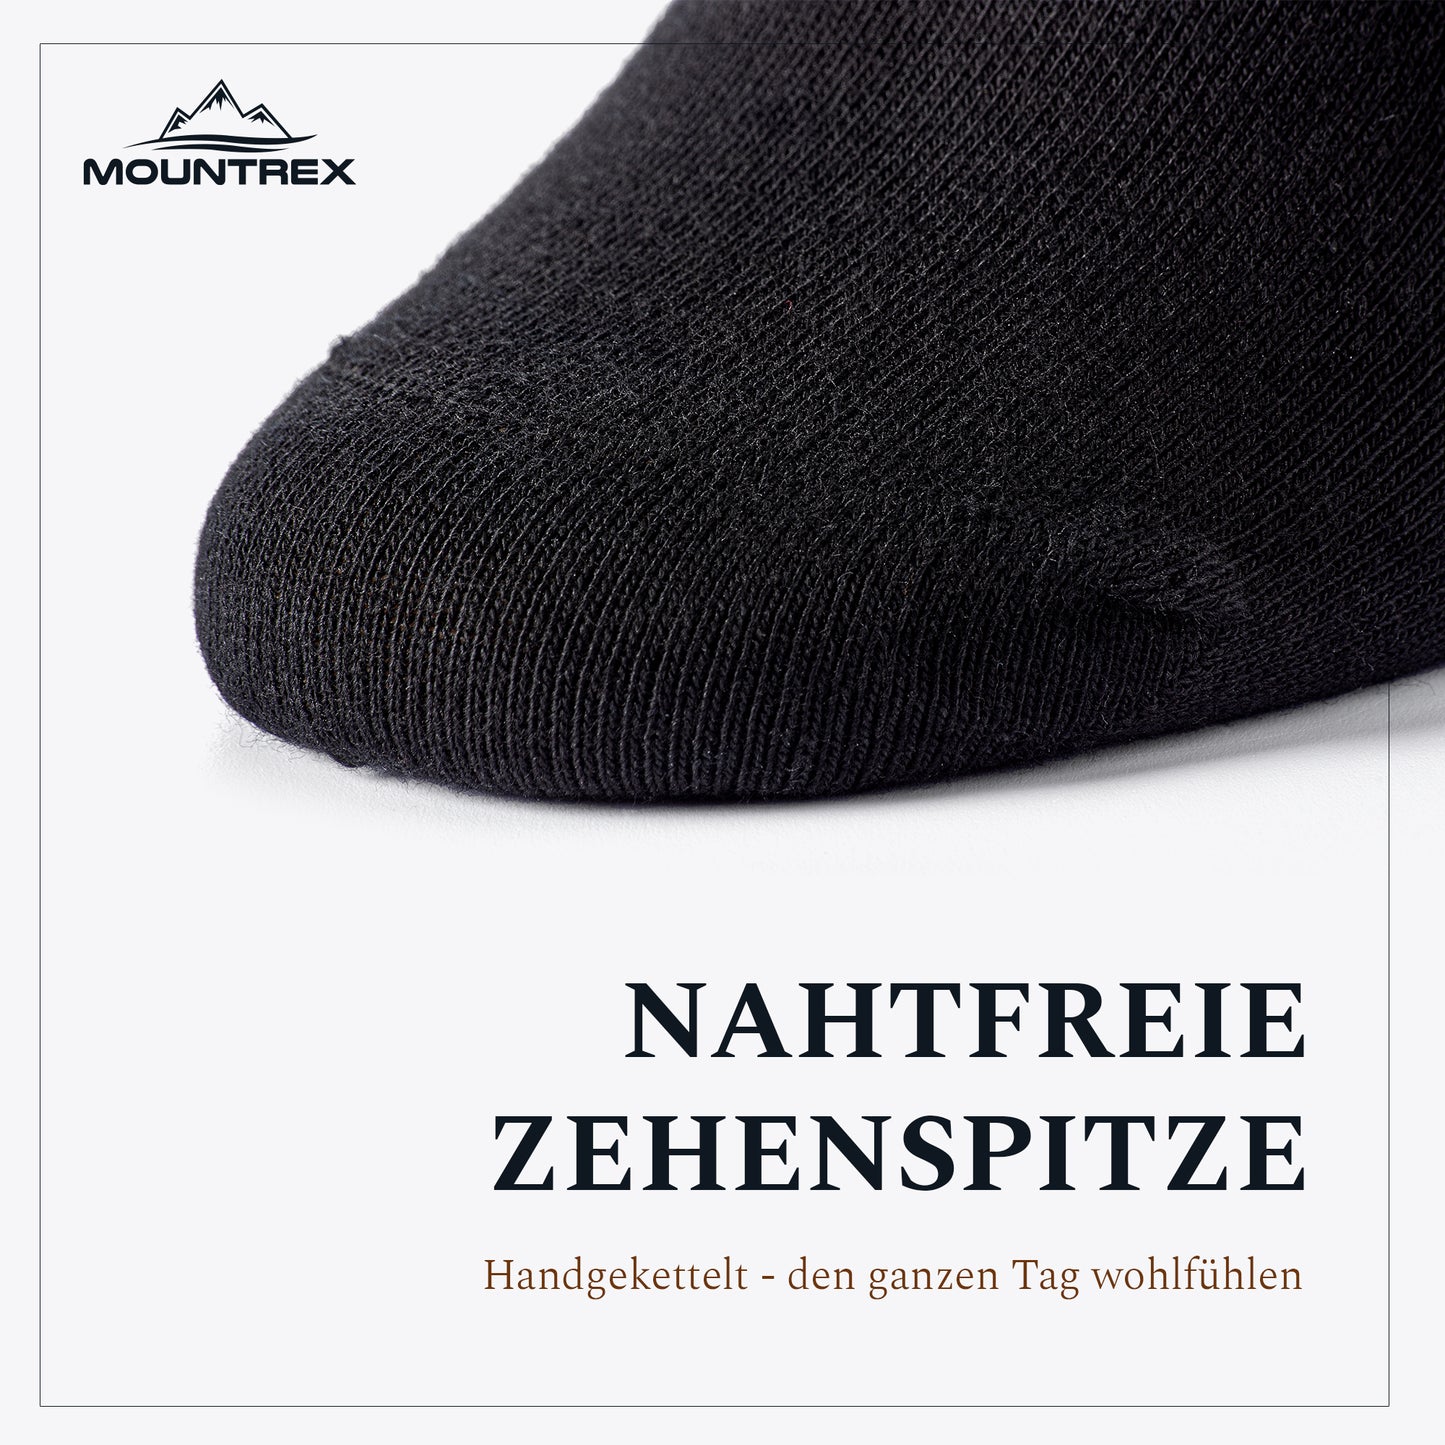 Business Socken Herren Damen (10 Paar) - 4 x Schwarz, 3 x Anthrazit, 3 x Marineblau